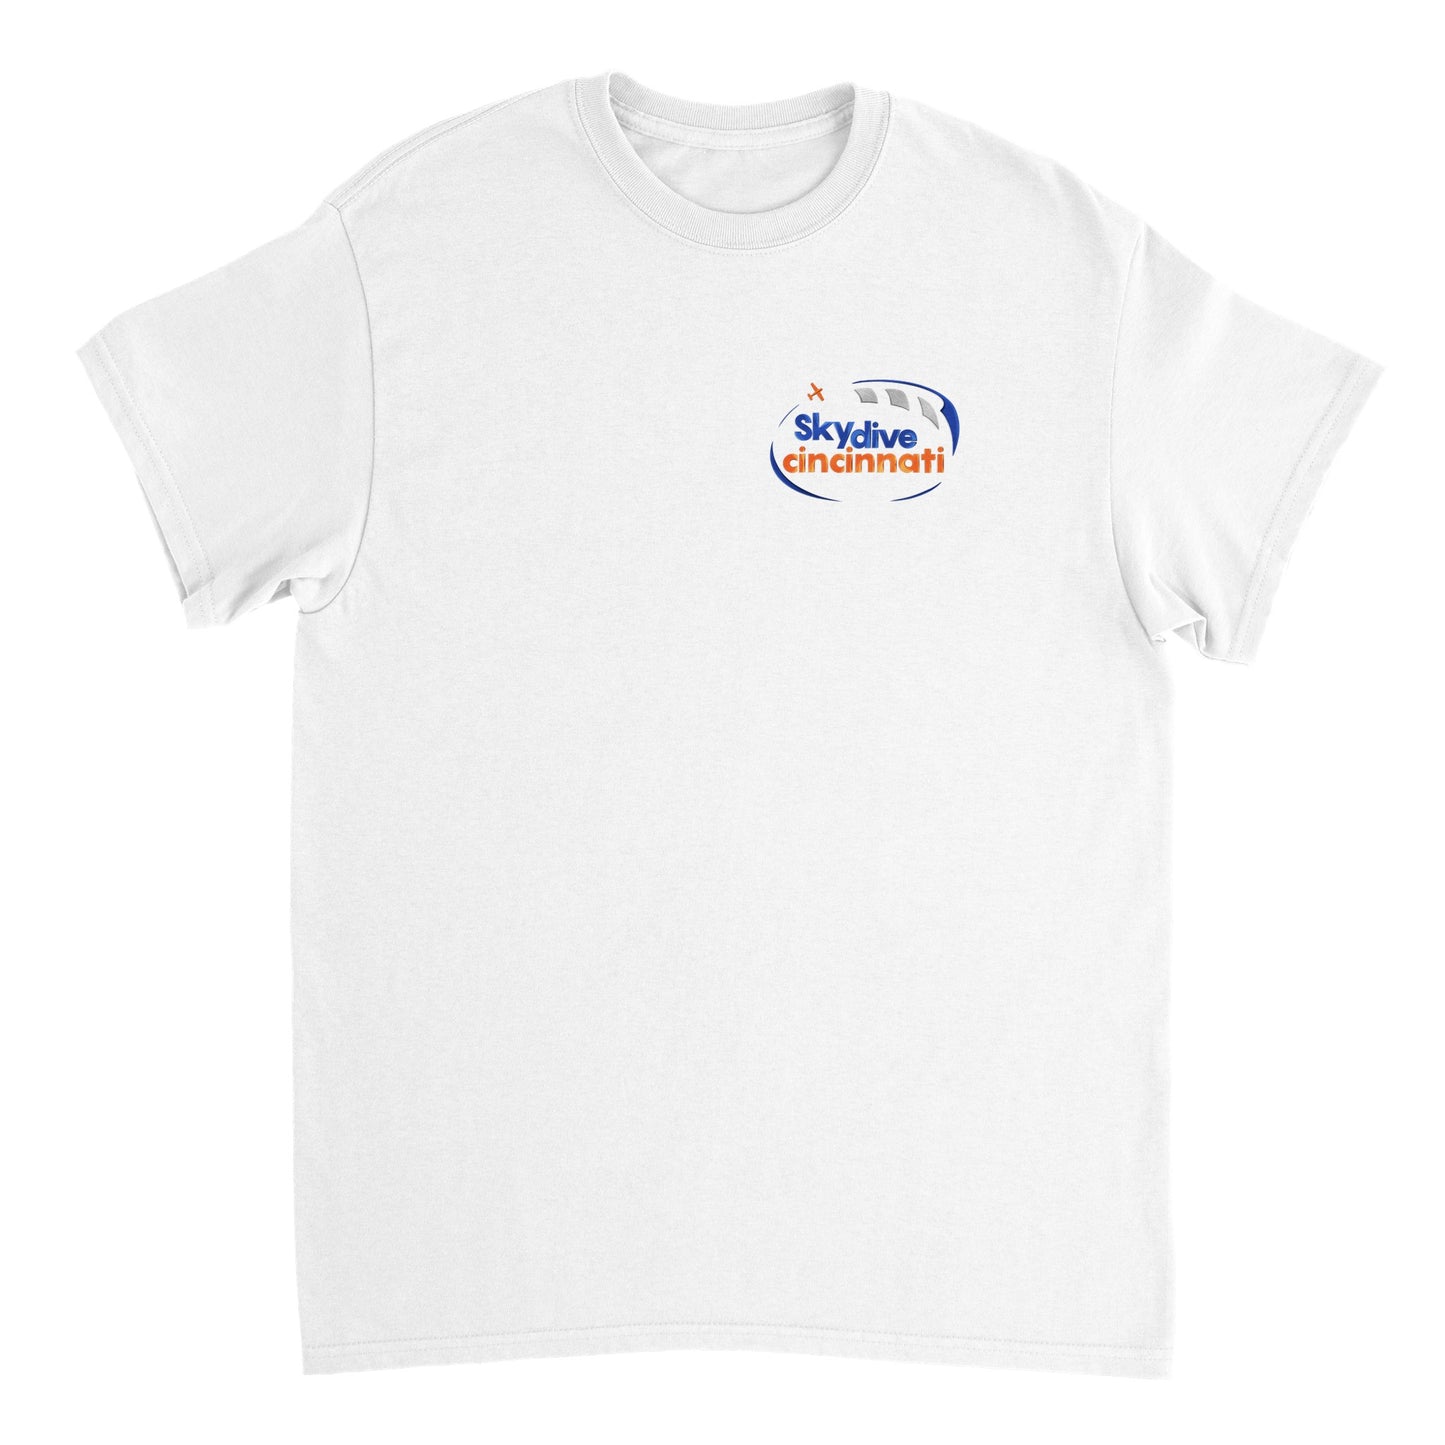 Skydive Cincinnati - Heavyweight Unisex Crewneck T-shirt